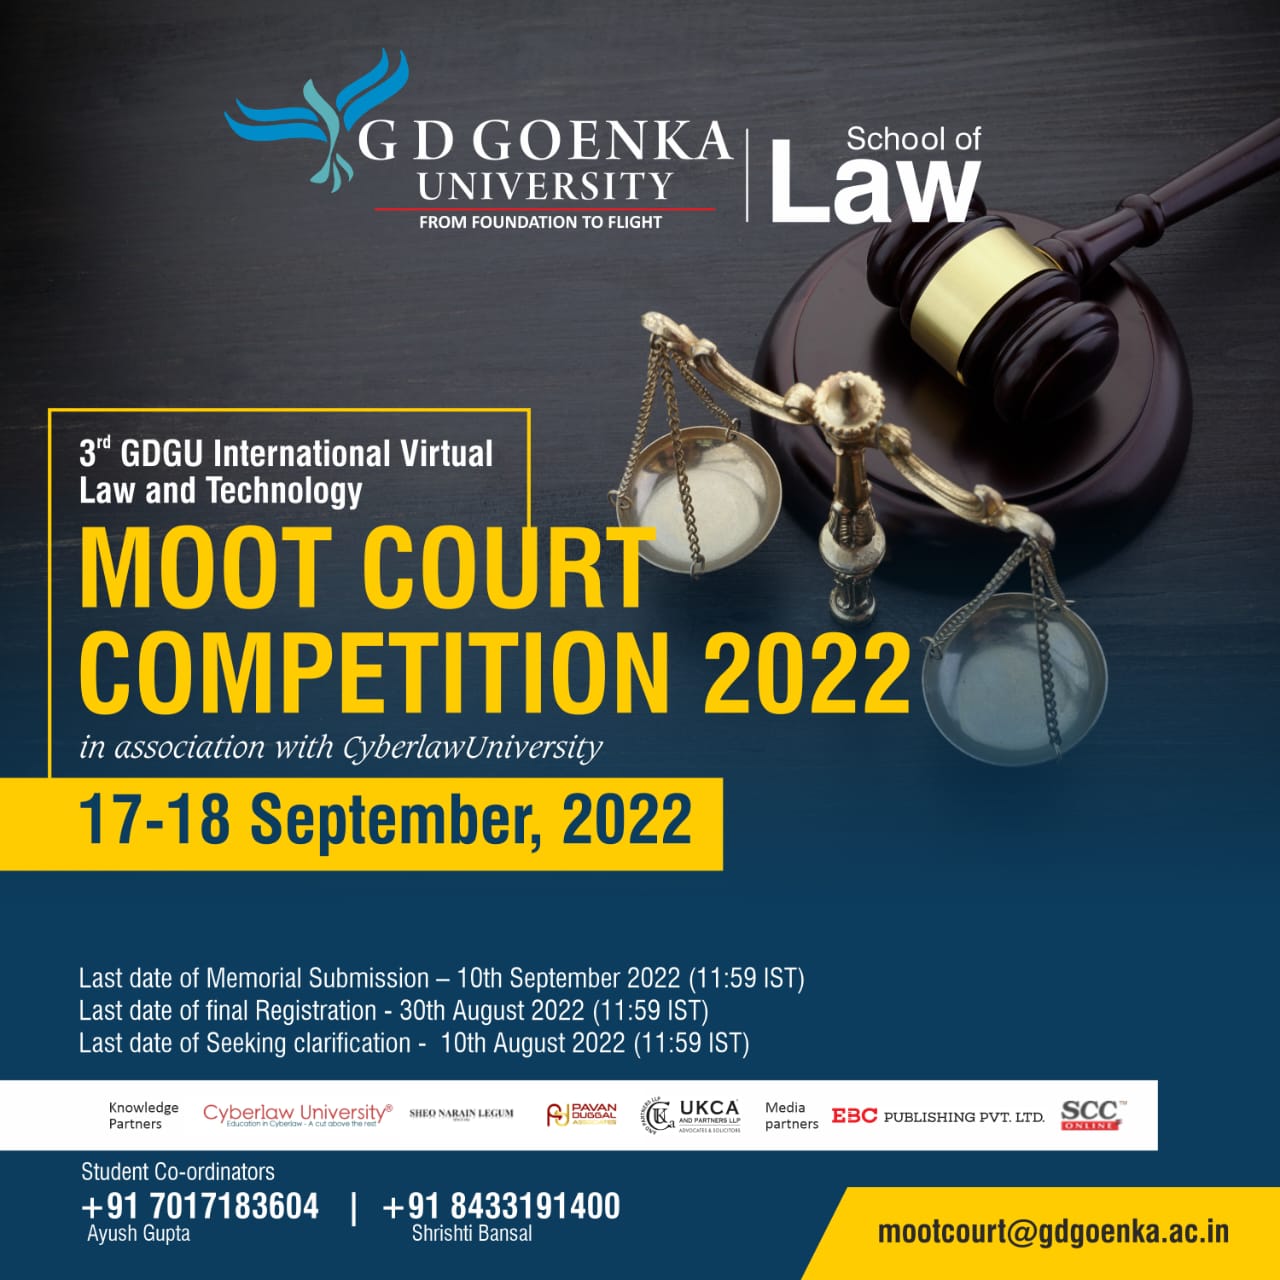 3rd GD Goenka International Virtual Law and Technology Moot Court